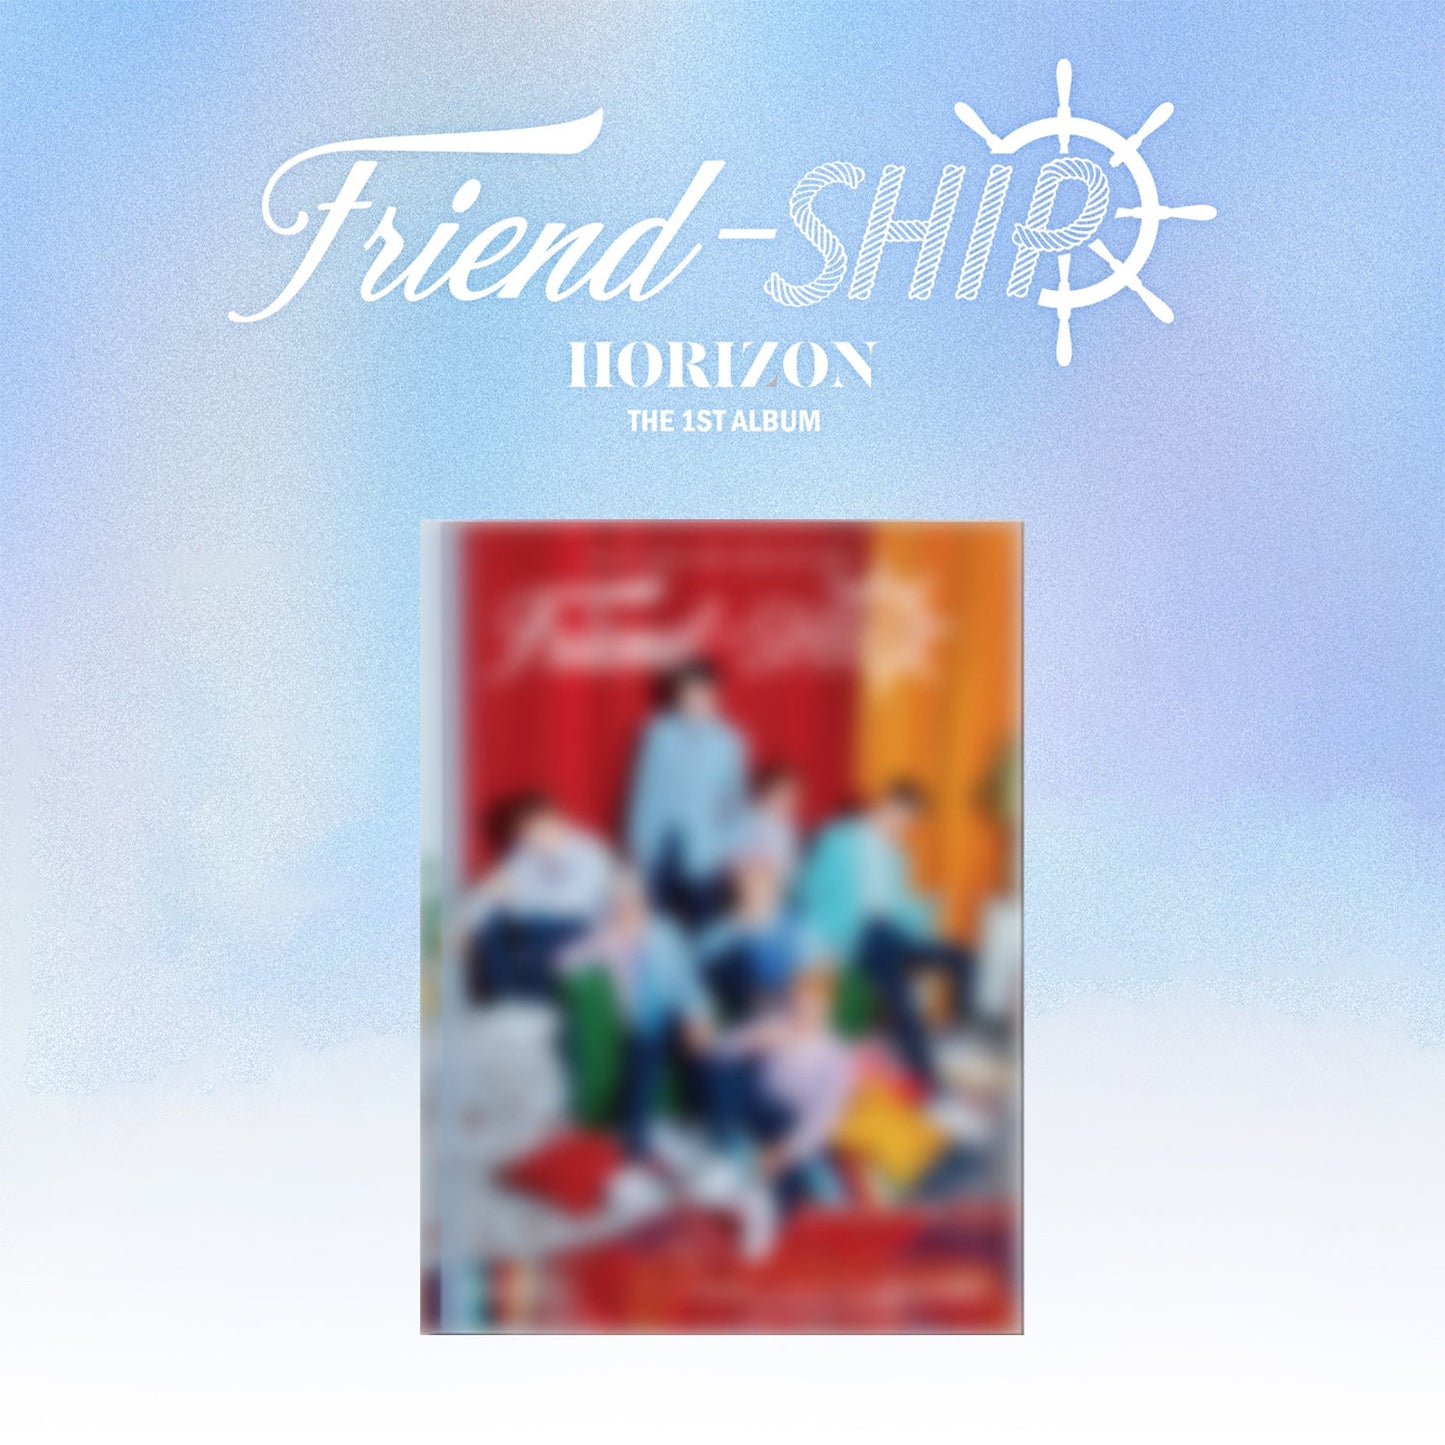 HORI7ON 1ST ALBUM 'FRIEND-SHIP' A VERSION COVER